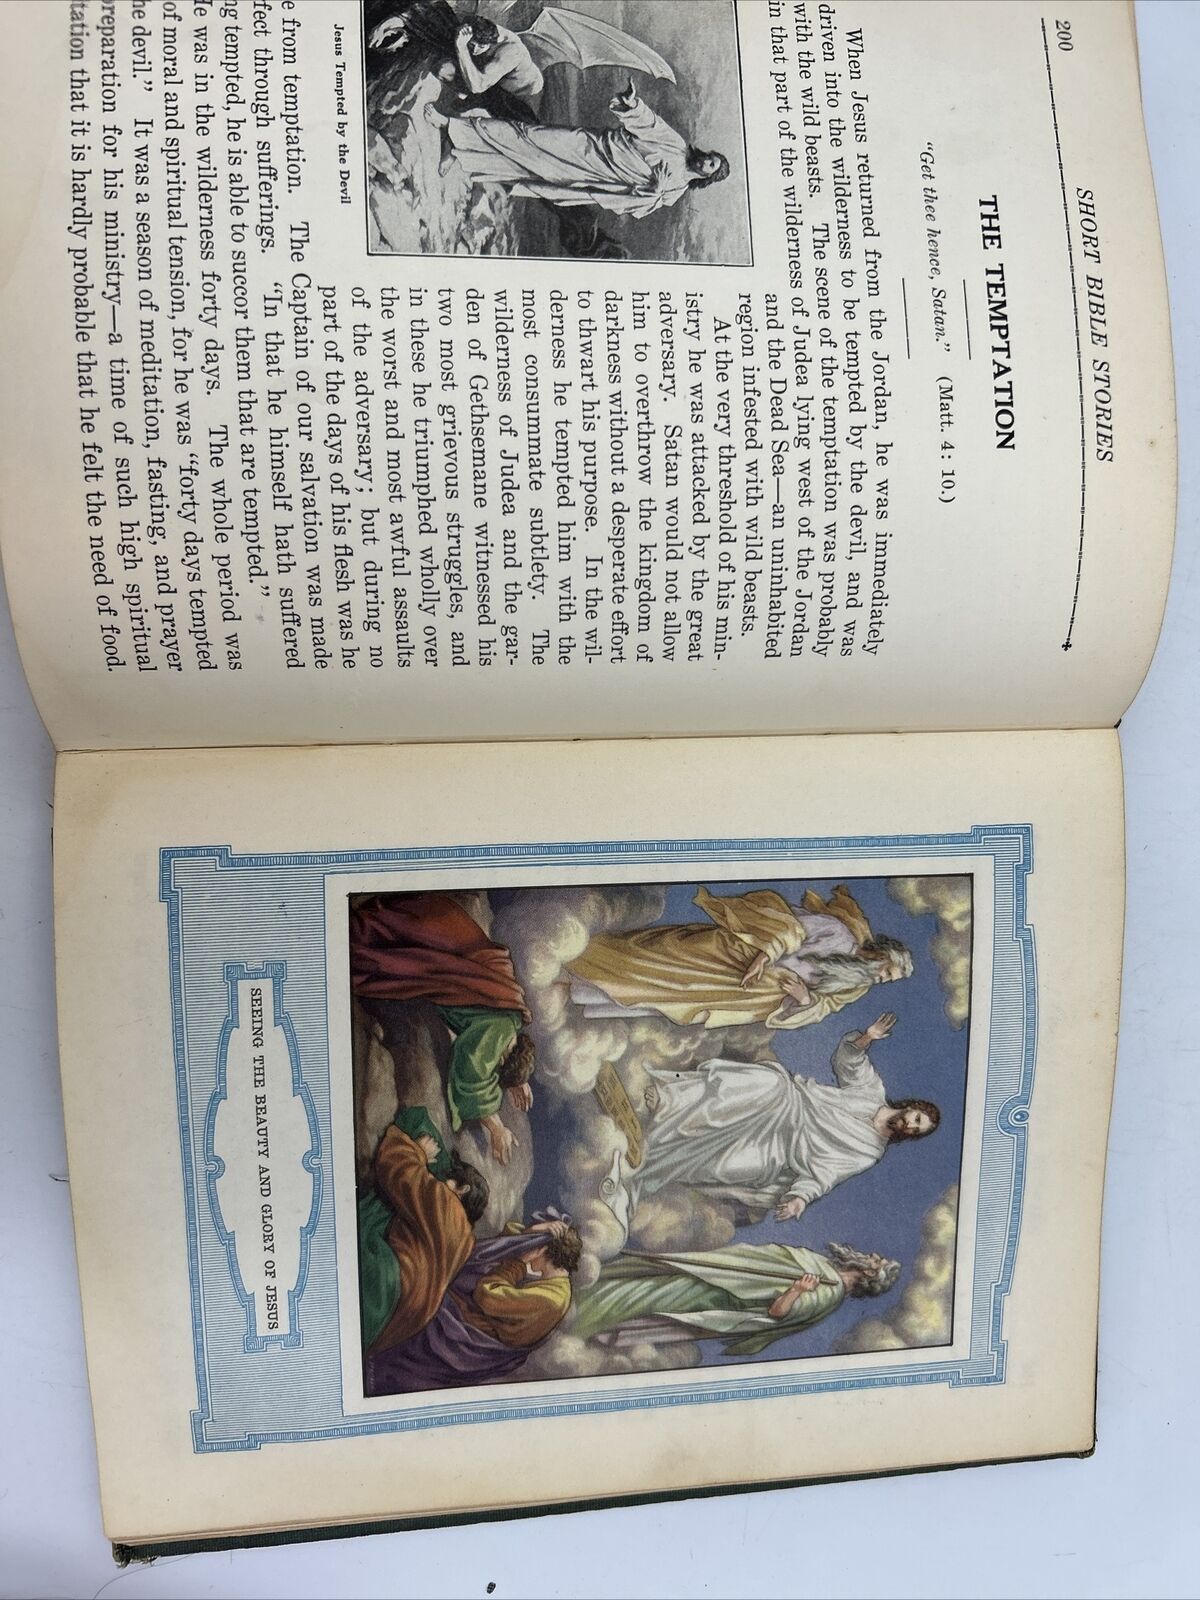 1925/1930 Copyright Gospel Advocate SHORT BIBLE STORIES by James E Chessor